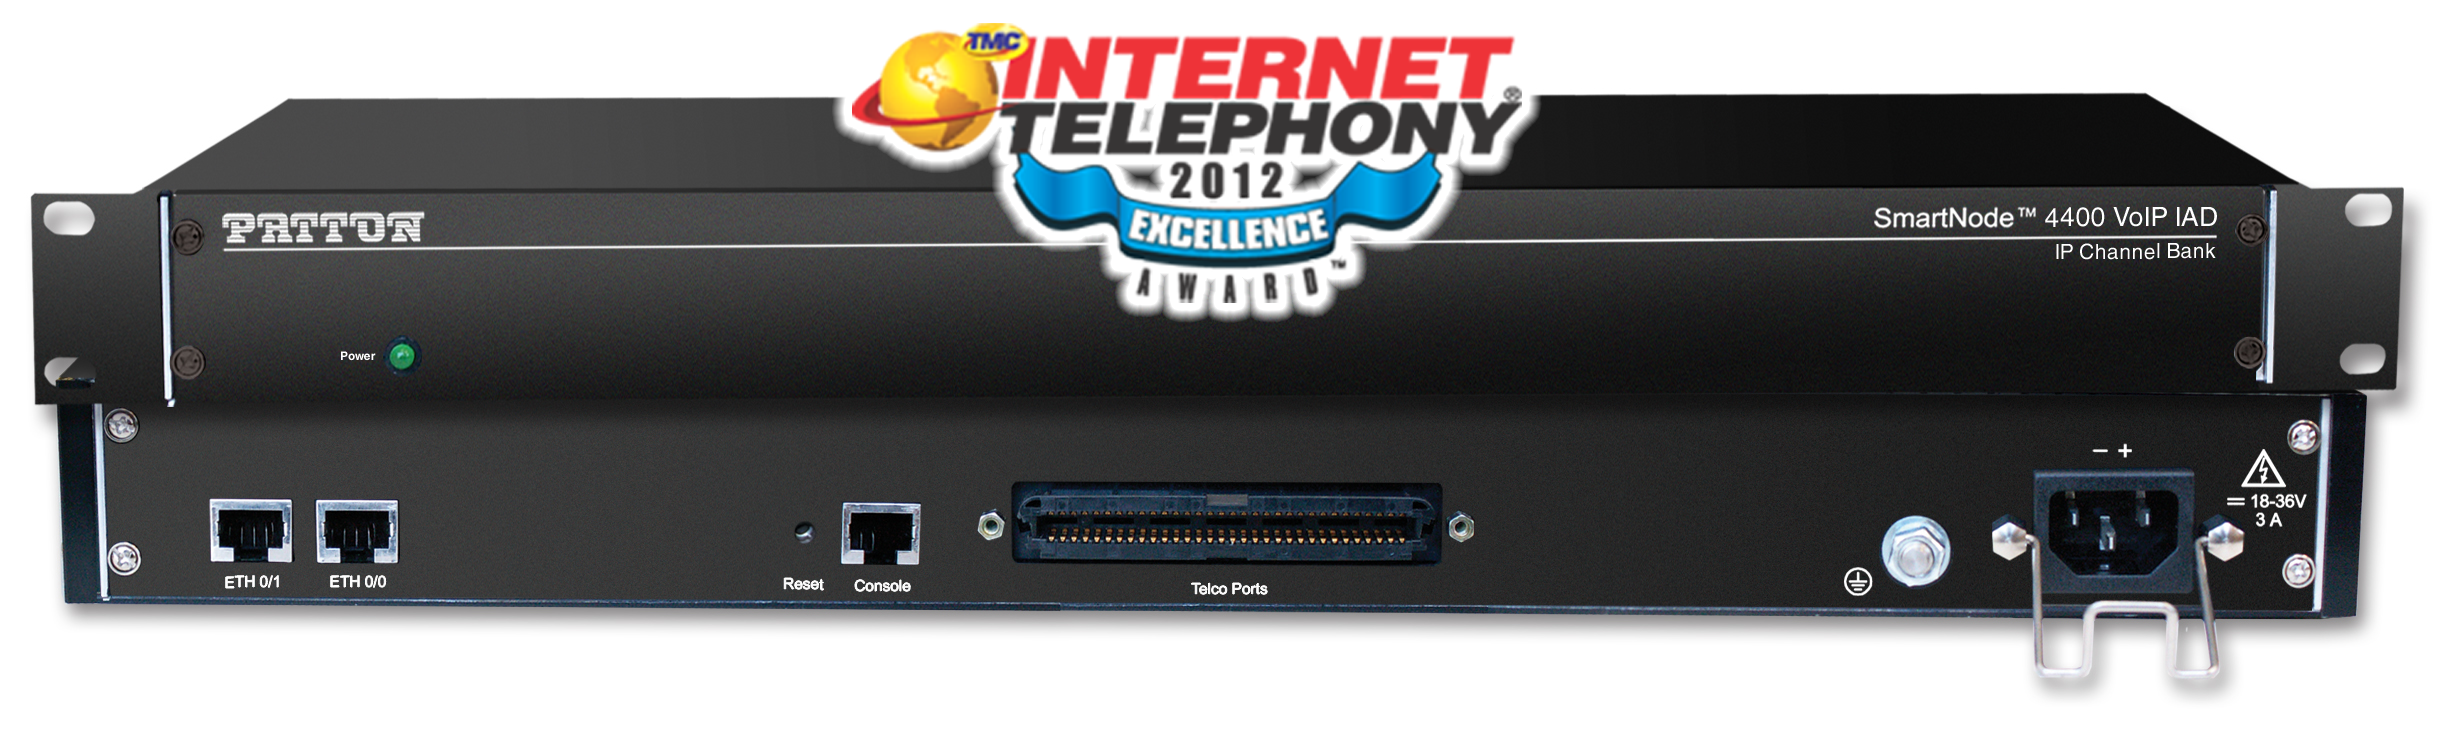 Patton SmartNode SN4416/JO/UI IpChannelBank Analog VoIP Router | 16 FXO ports